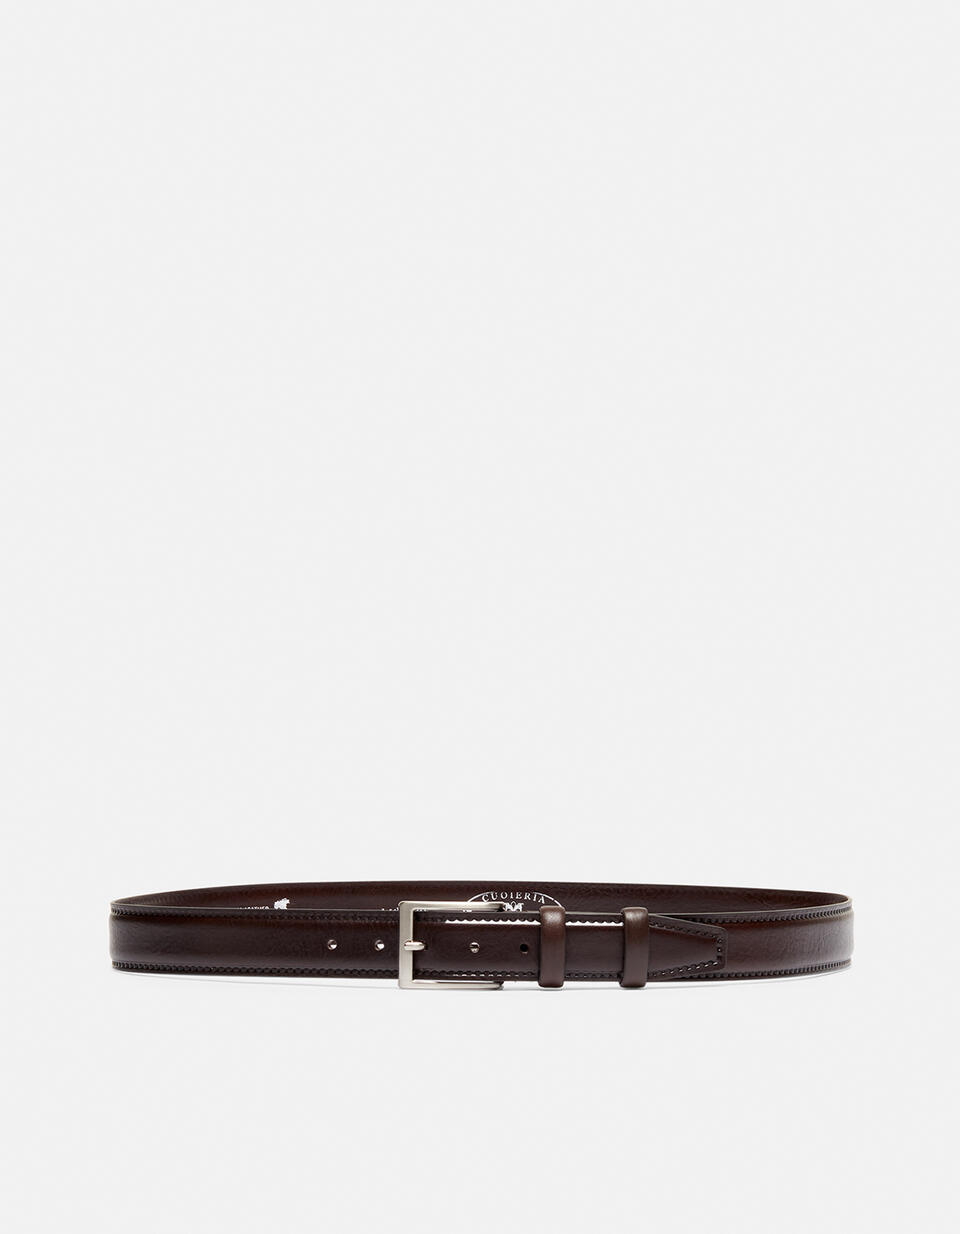 Cintura Classica in pelle con cucitura a contrasto Testa di moro  - Cinture Uomo - Cinture - Cuoieria Fiorentina